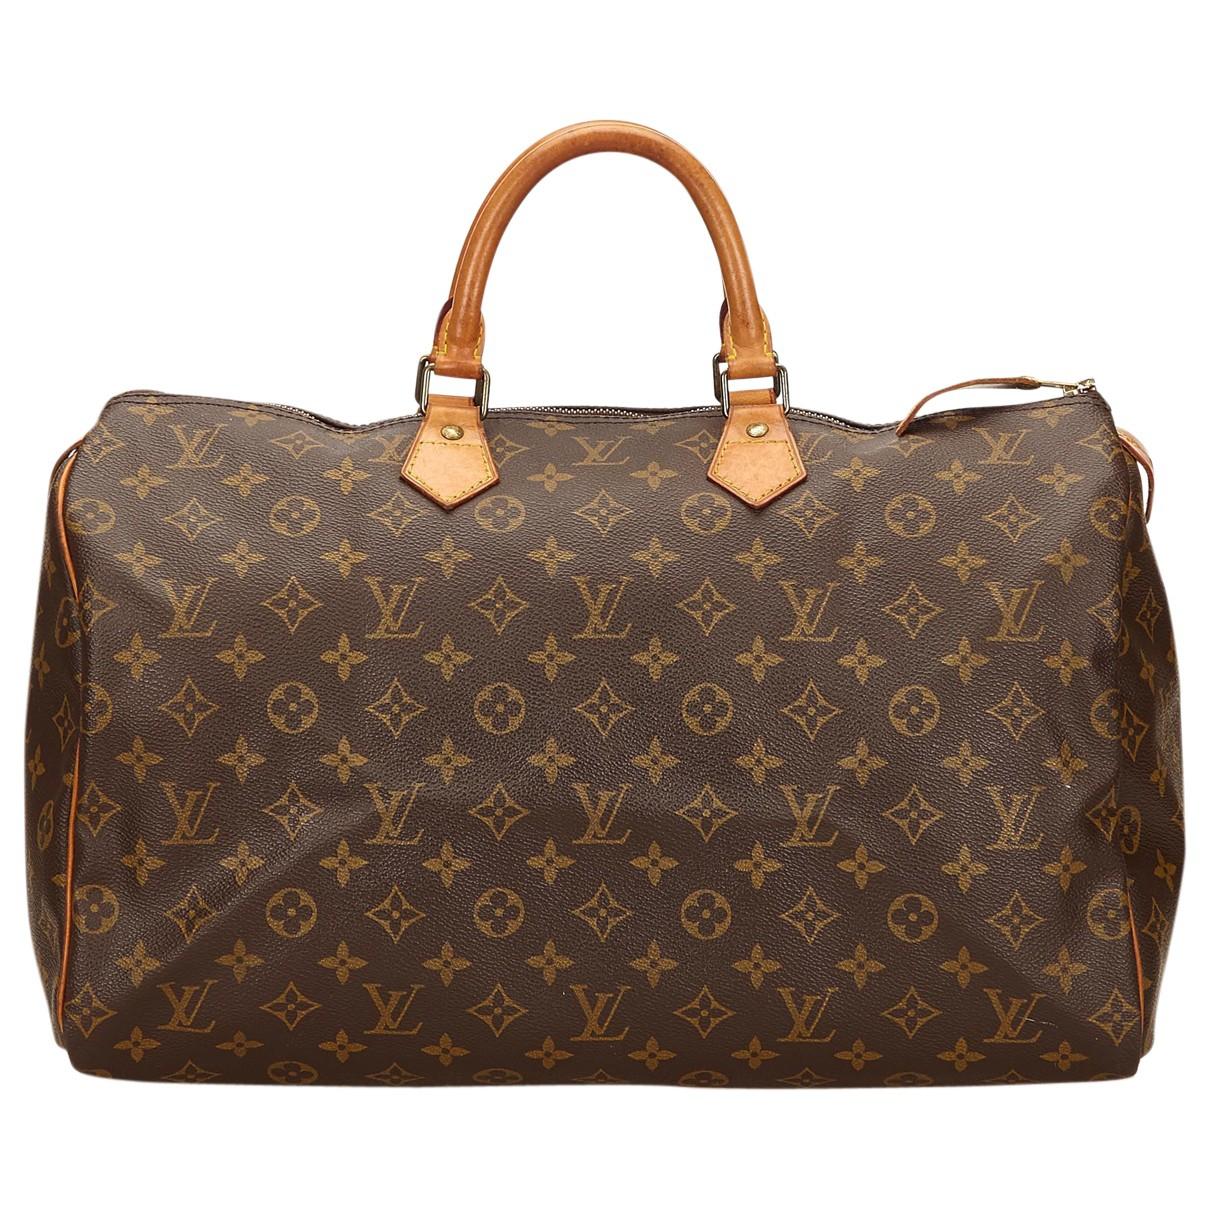 Lyst - Louis vuitton Pre-owned Speedy Cloth Handbag in Brown - Save 33%